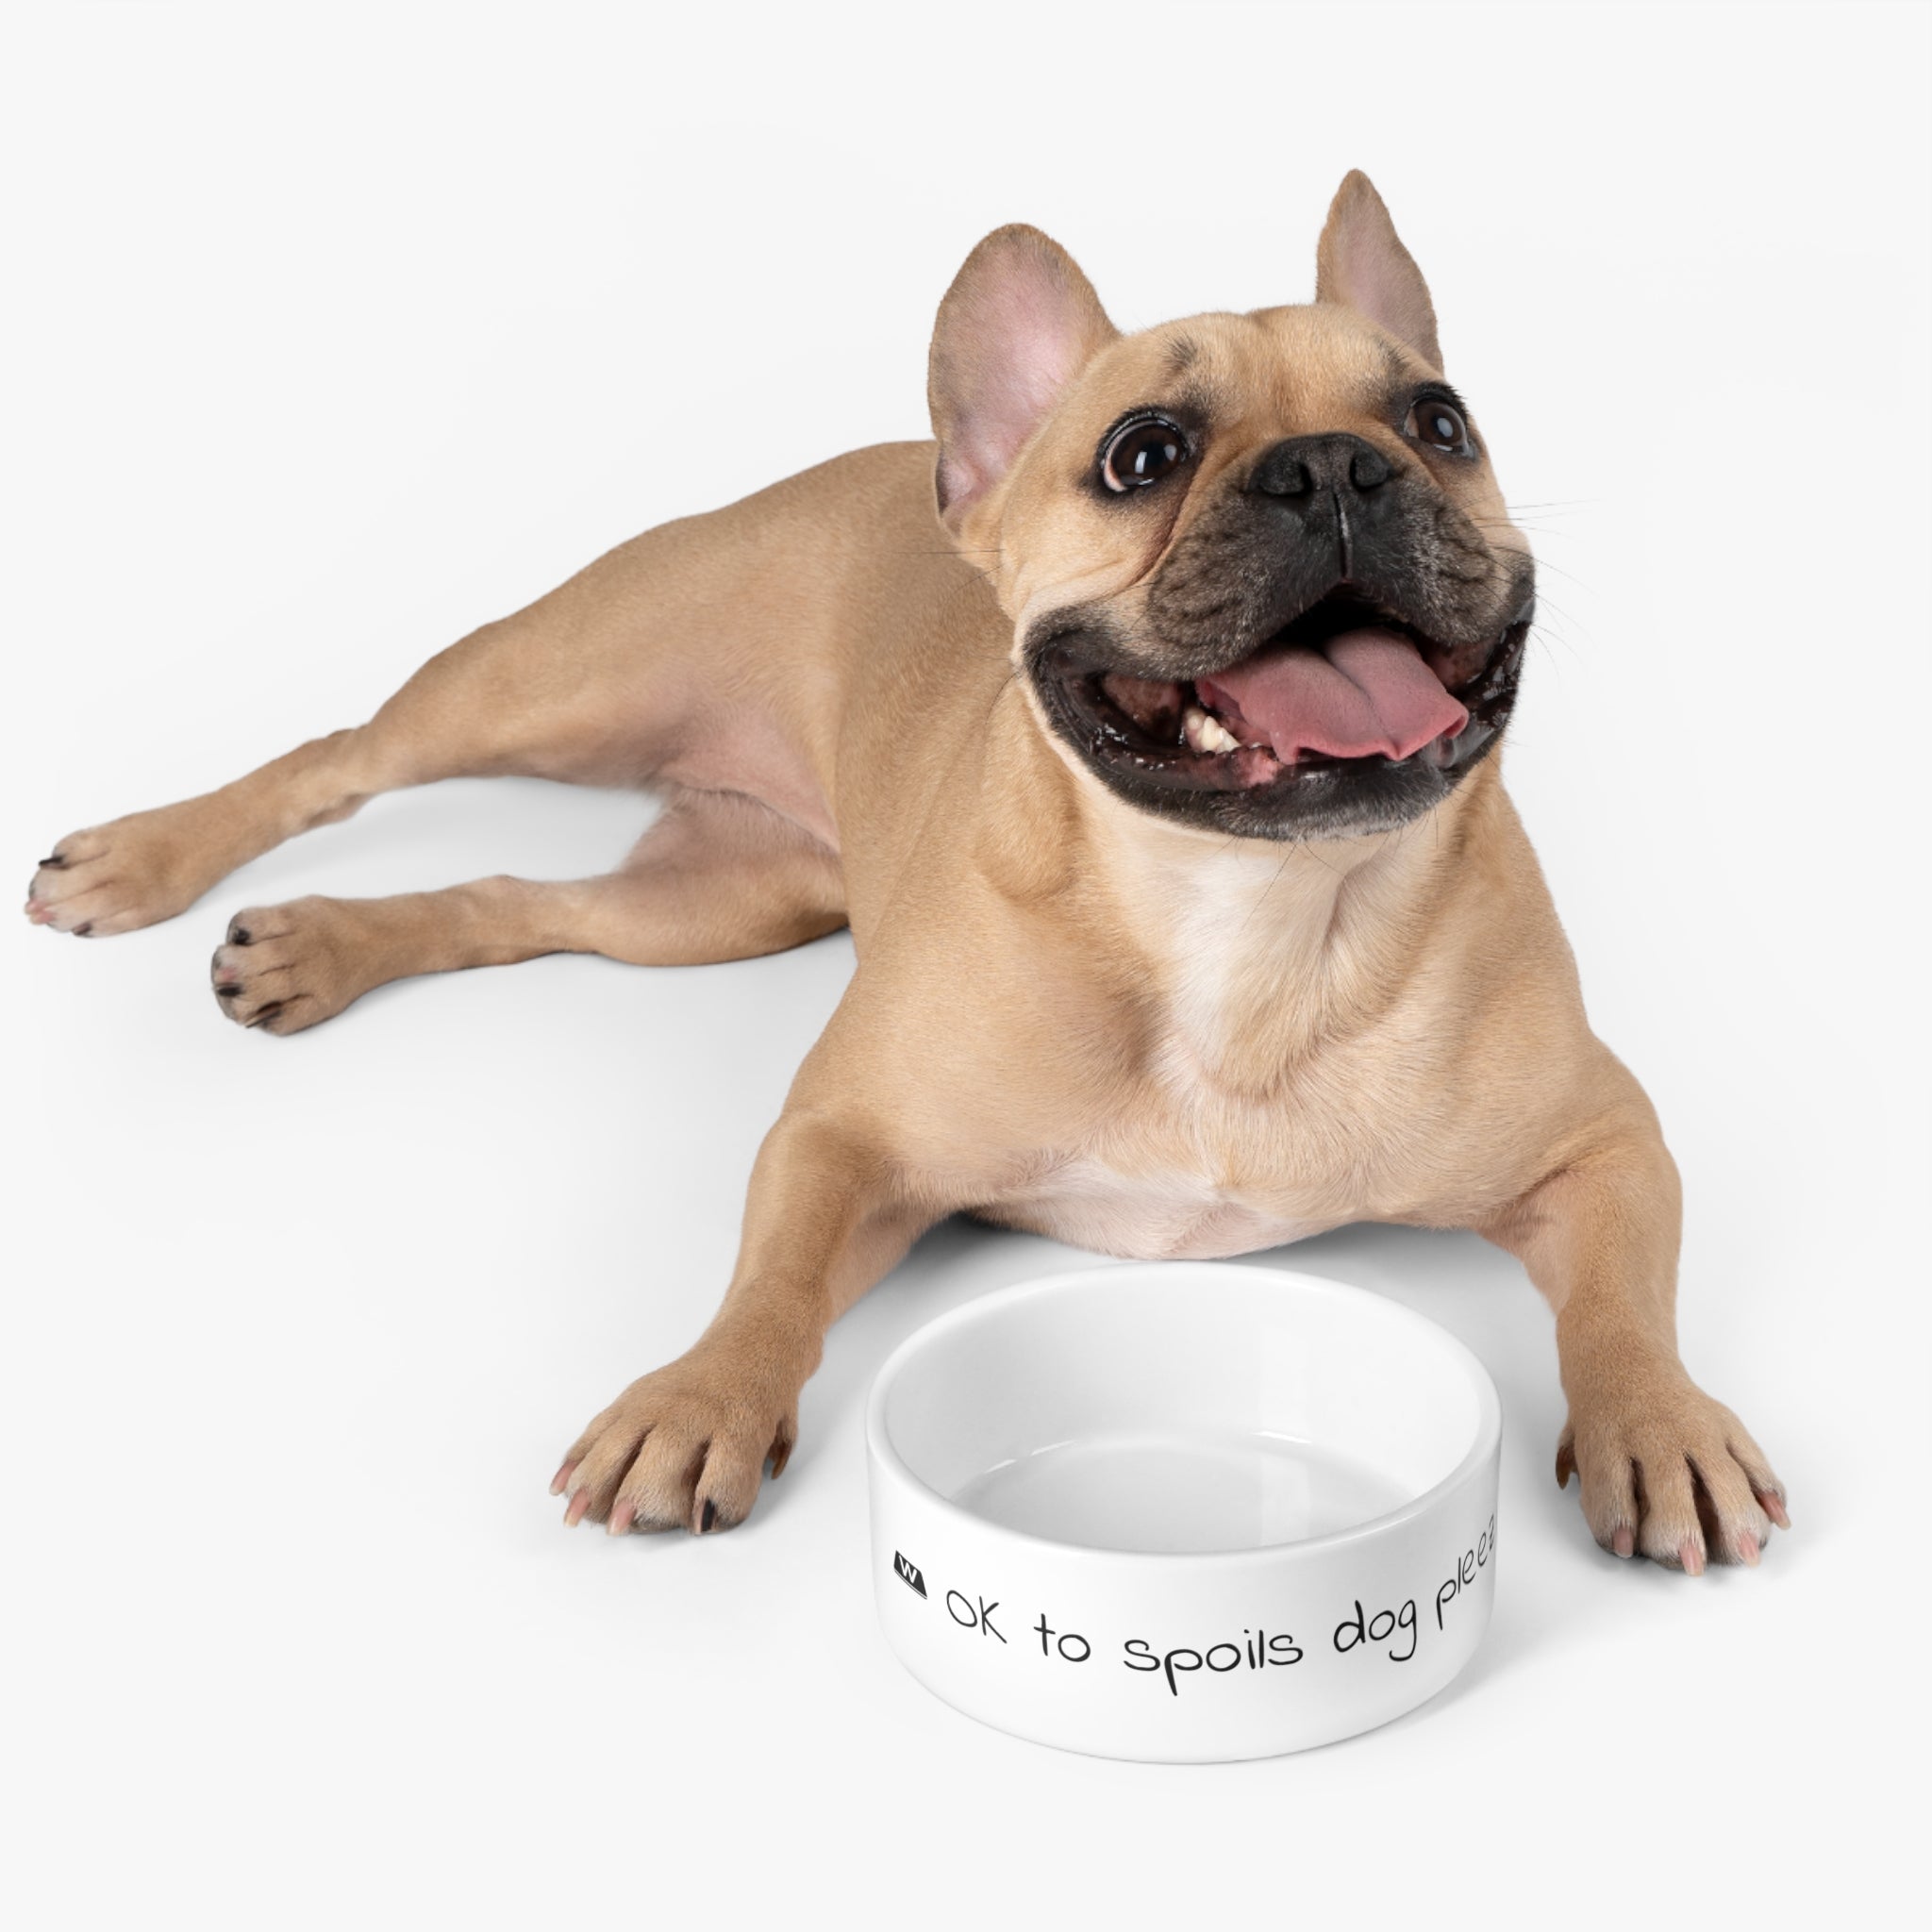 OK to spoils dog pleez - Pet Bowl: a dog lying next to a bowl, a close-up of a dog's nose, a close-up of a dog's tongue.